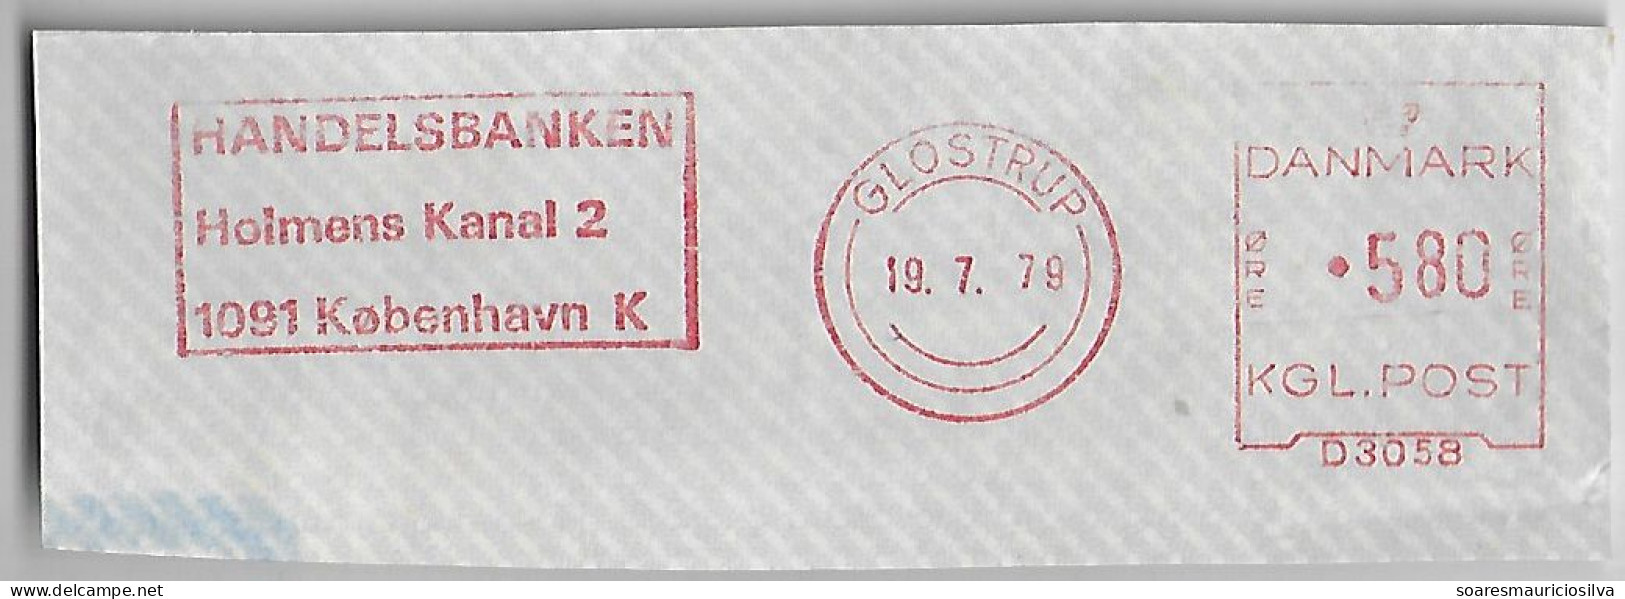 Denmark 1979 Fragment Cover Meter Stamp Francotyp Slogan Handelsbanken From Glostrup - Covers & Documents